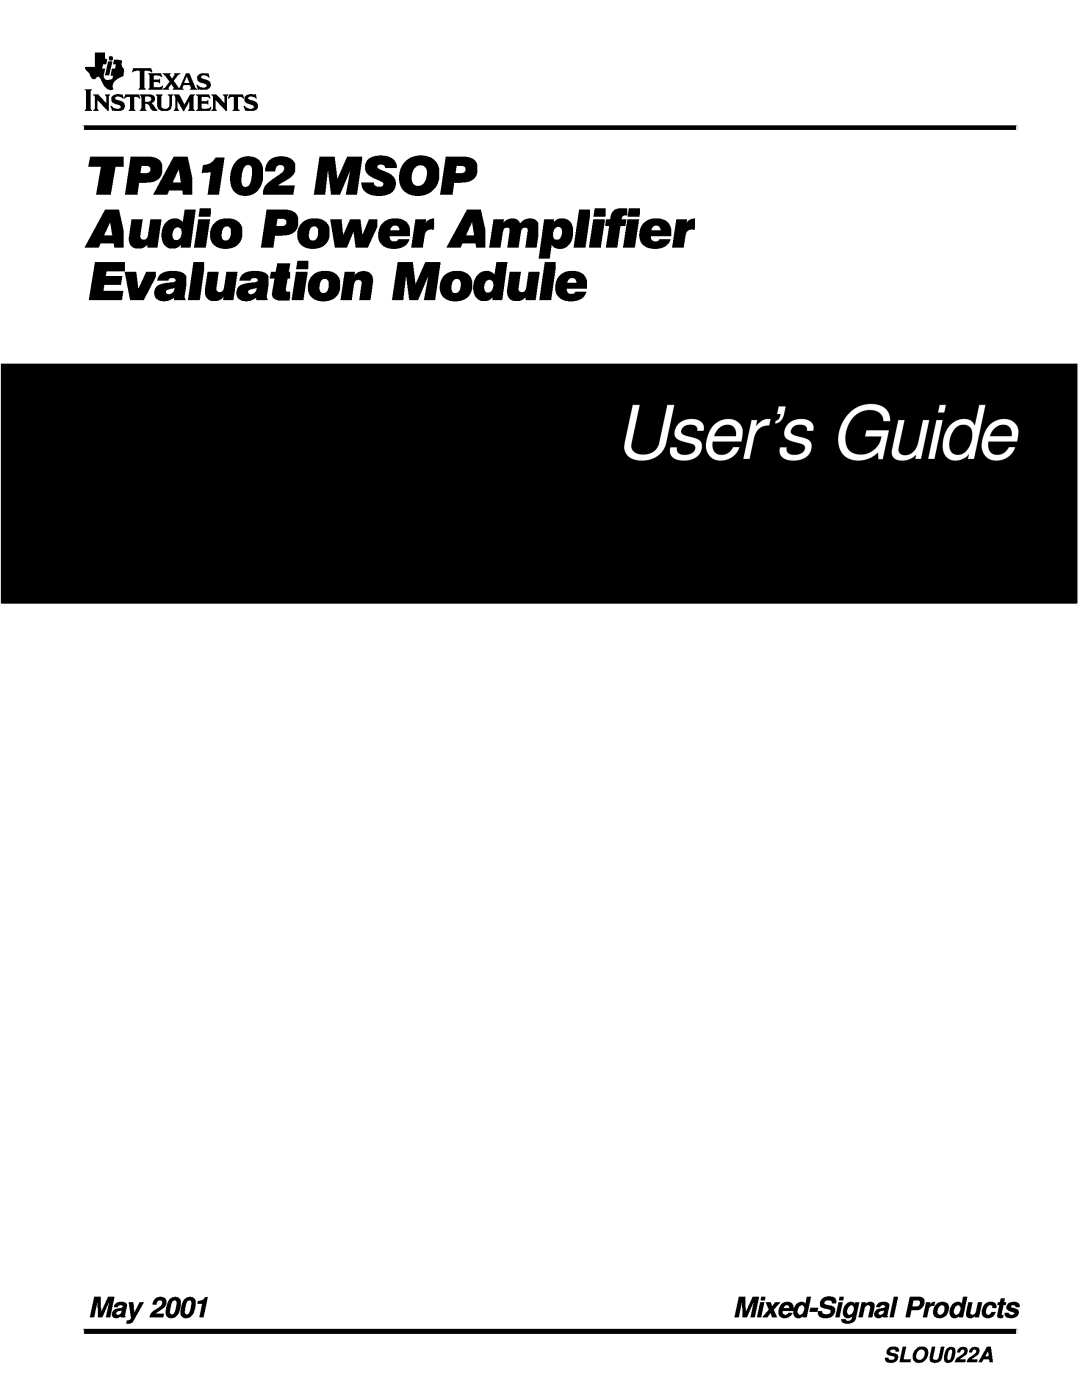 Texas Instruments TPA102 MSOP manual User’s Guide, EvaluATPA1udio02ationPowerMSOPModuleAmplifier, Mixed-SignalProducts 